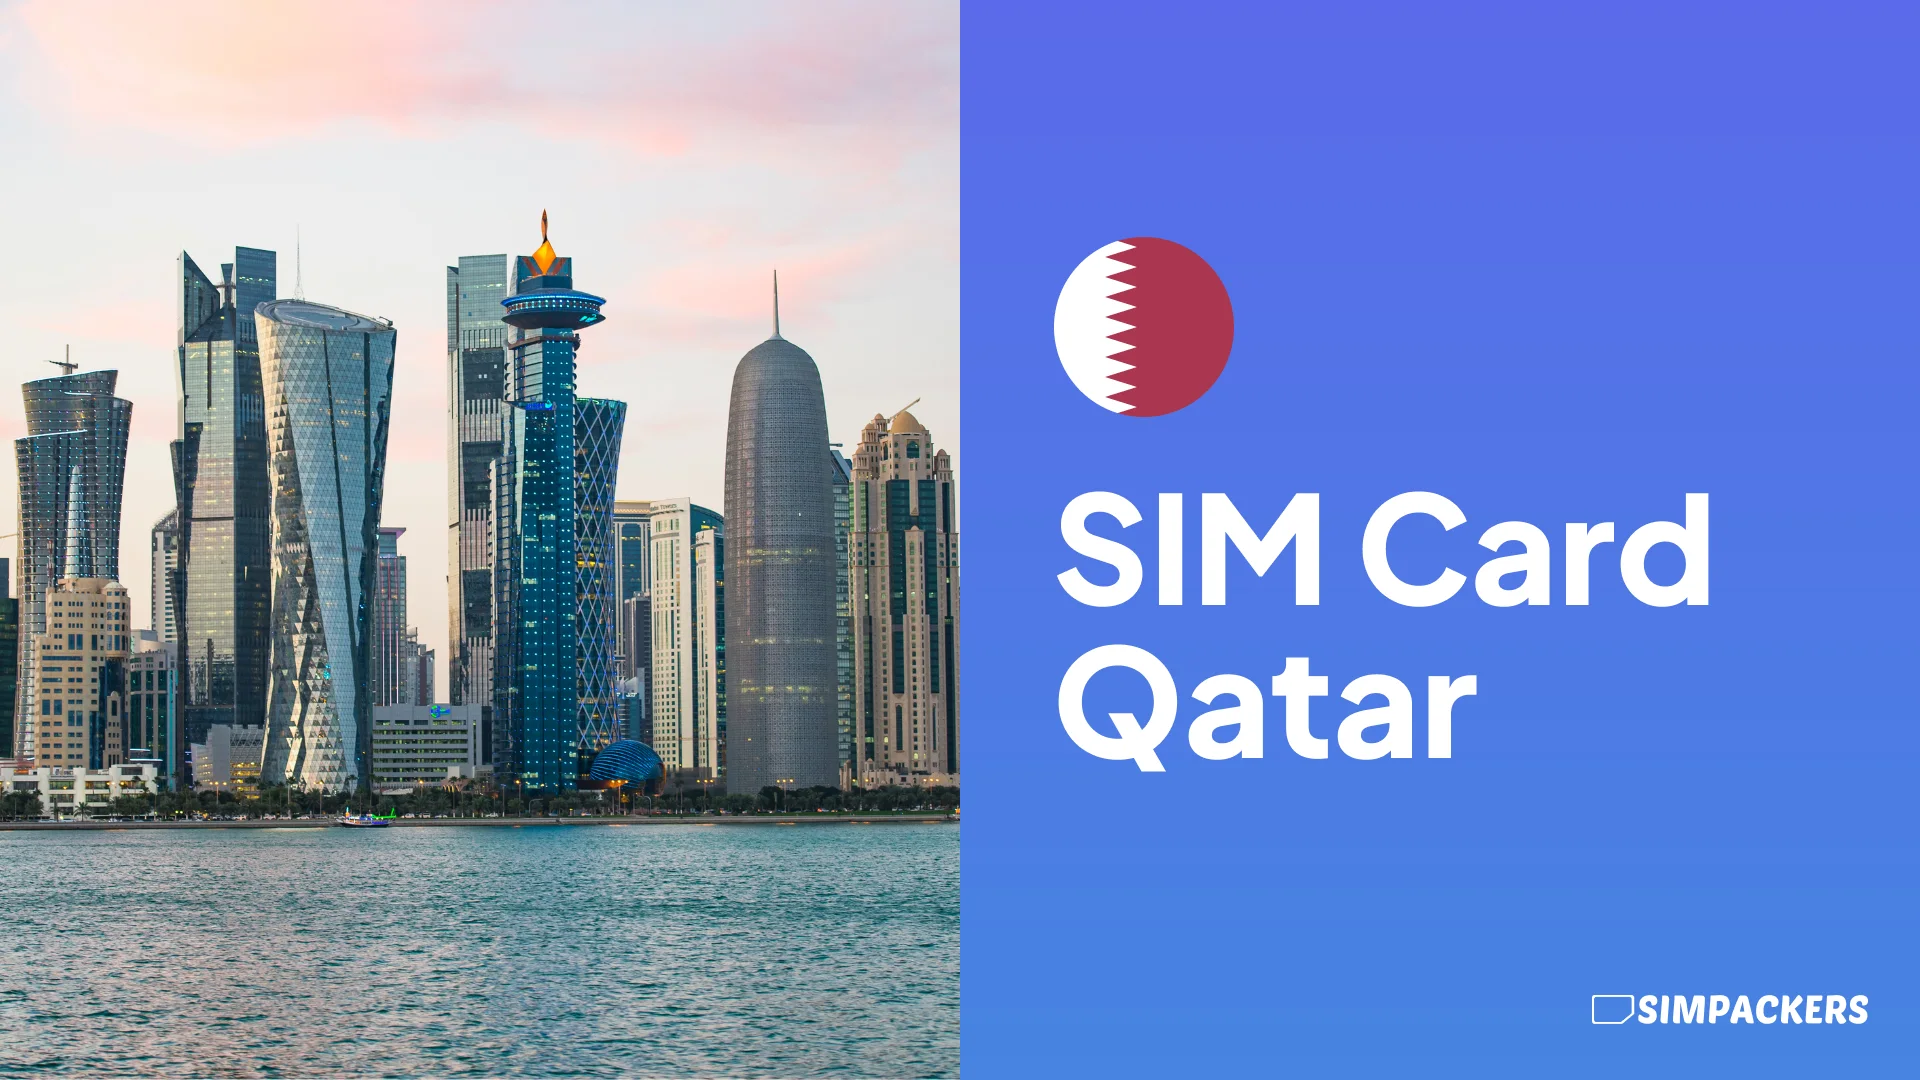 EN/FEATURED_IMAGES/sim-card-qatar.webp